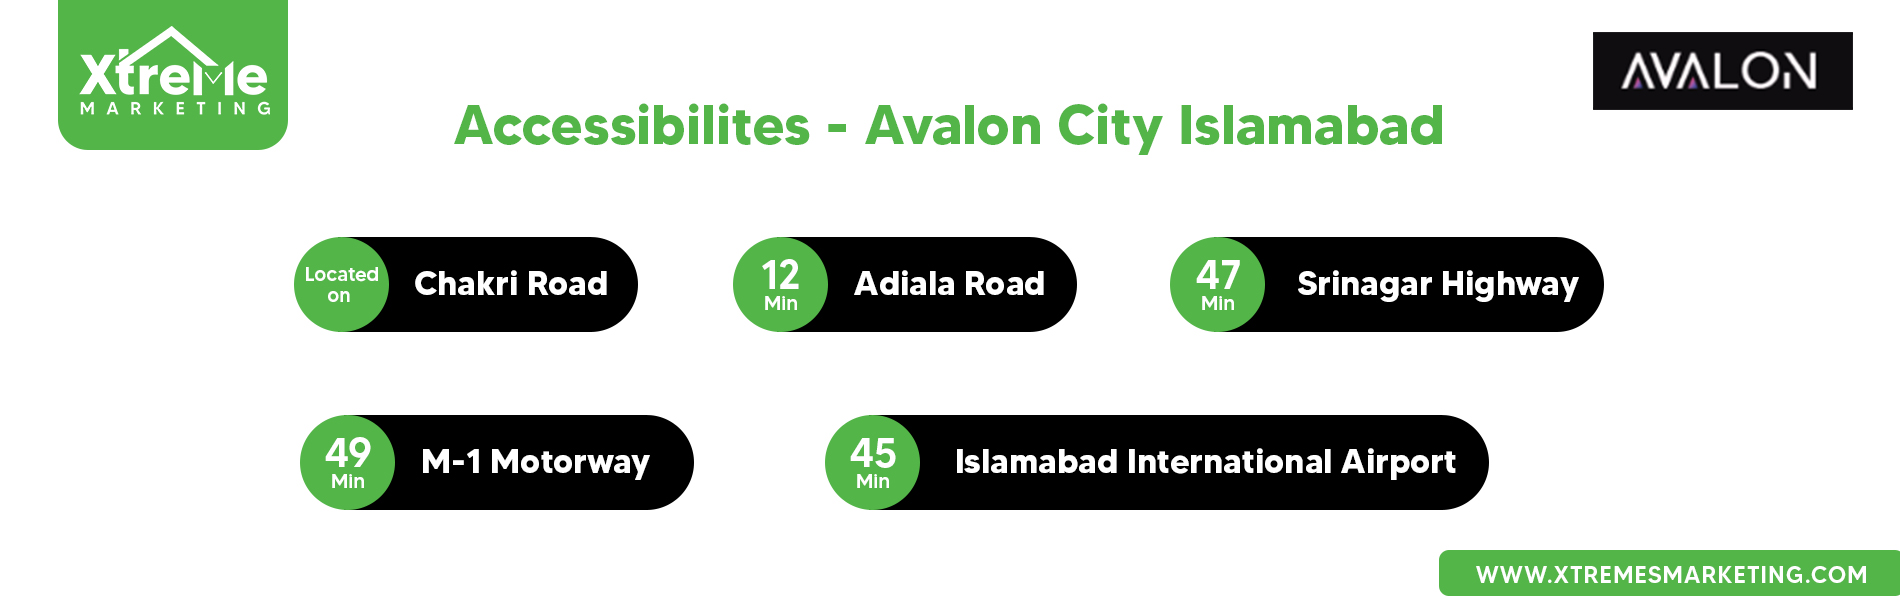 Avalon City Islamabad Accessisibilities